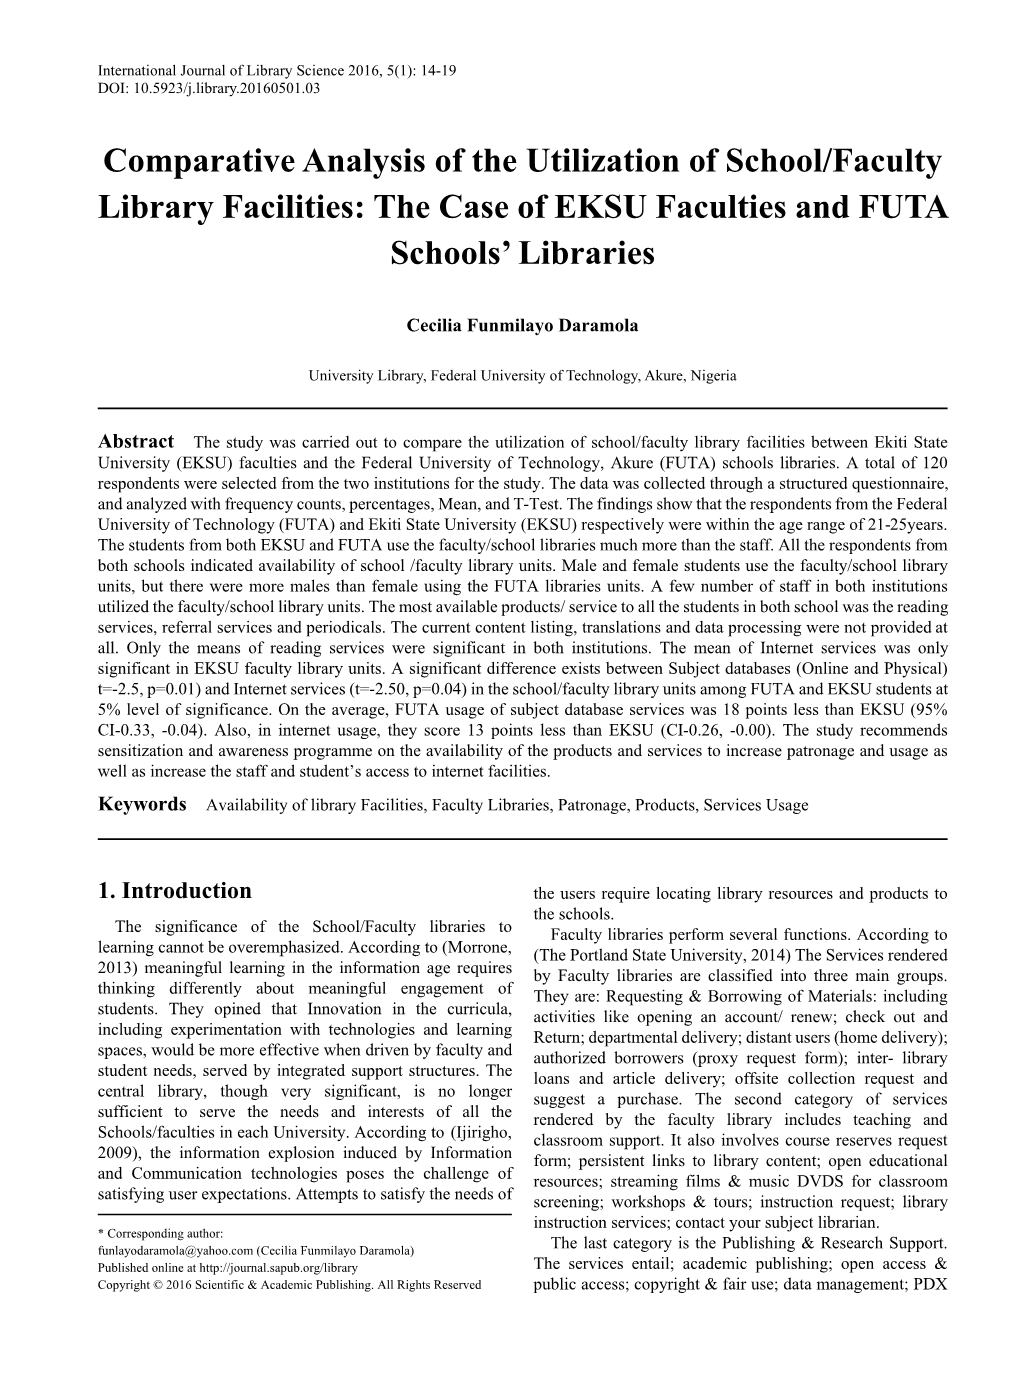 The Case of EKSU Faculties and FUTA Schools' Libraries